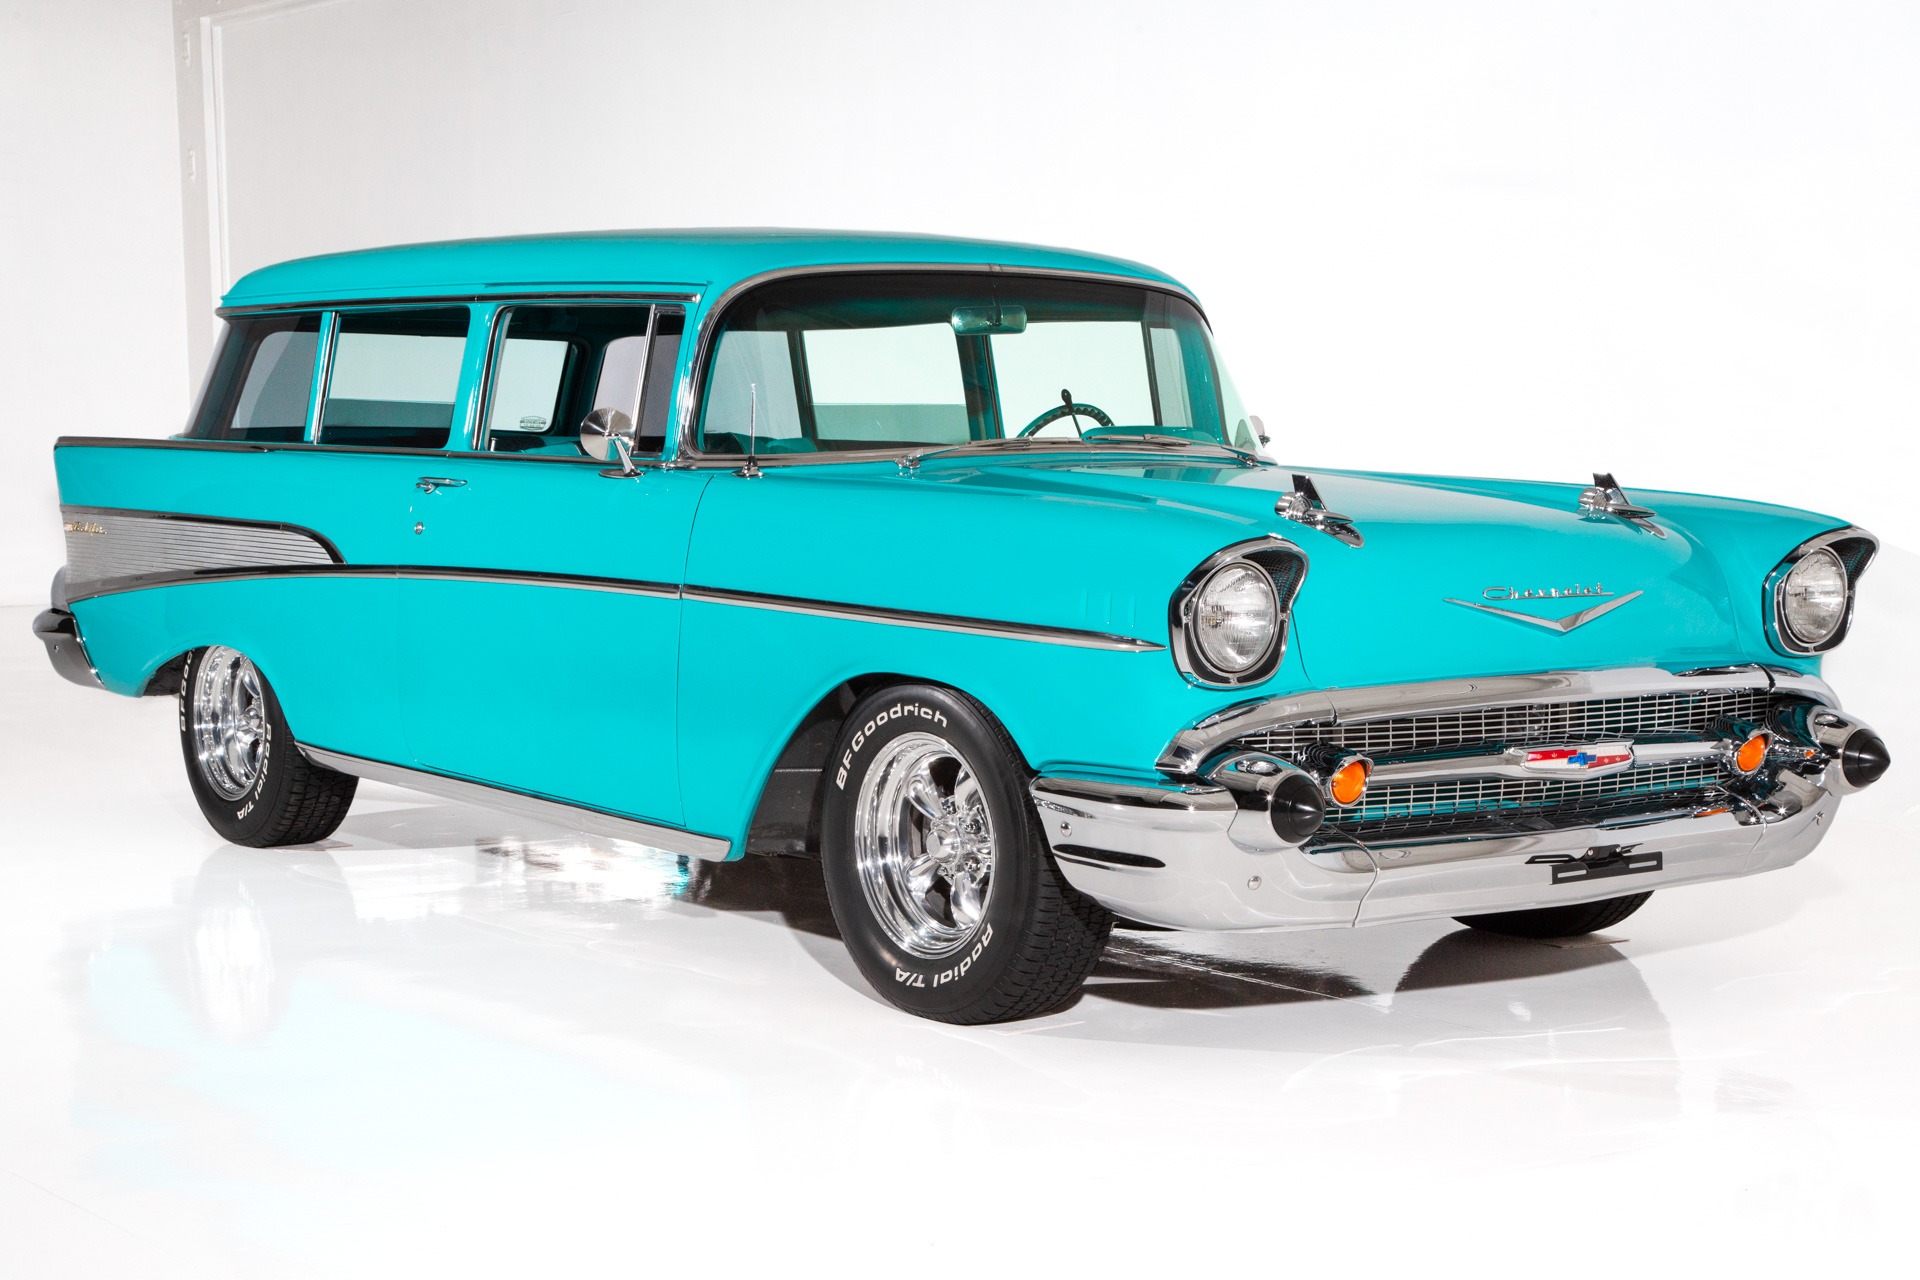 For Sale Used 1957 Chevrolet 2 Door Wagon ZZ4, Auto, PB, PB, AC | American Dream Machines Des Moines IA 50309